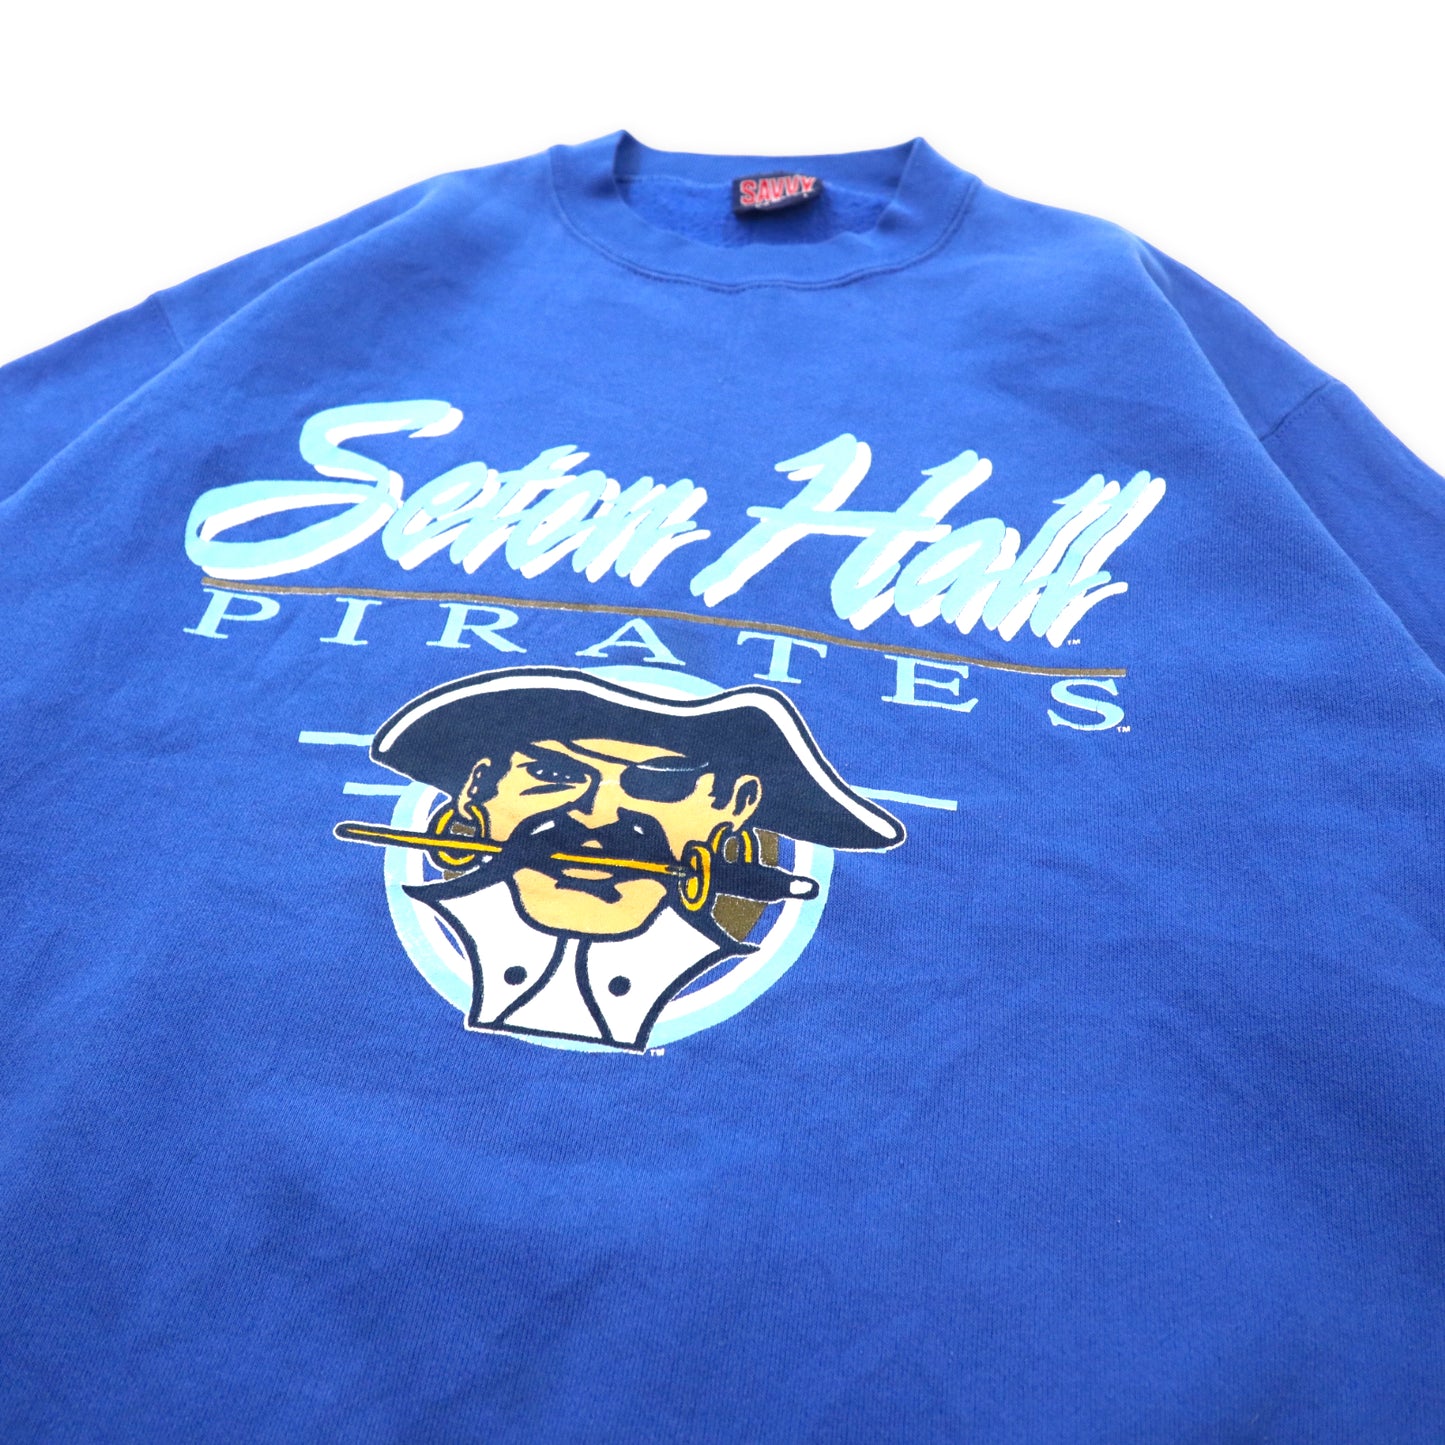 SAVVY TRAU & LOEVNER 90年代 プリントスウェット L ブルー コットン NCAA Seton Hall PIRATES